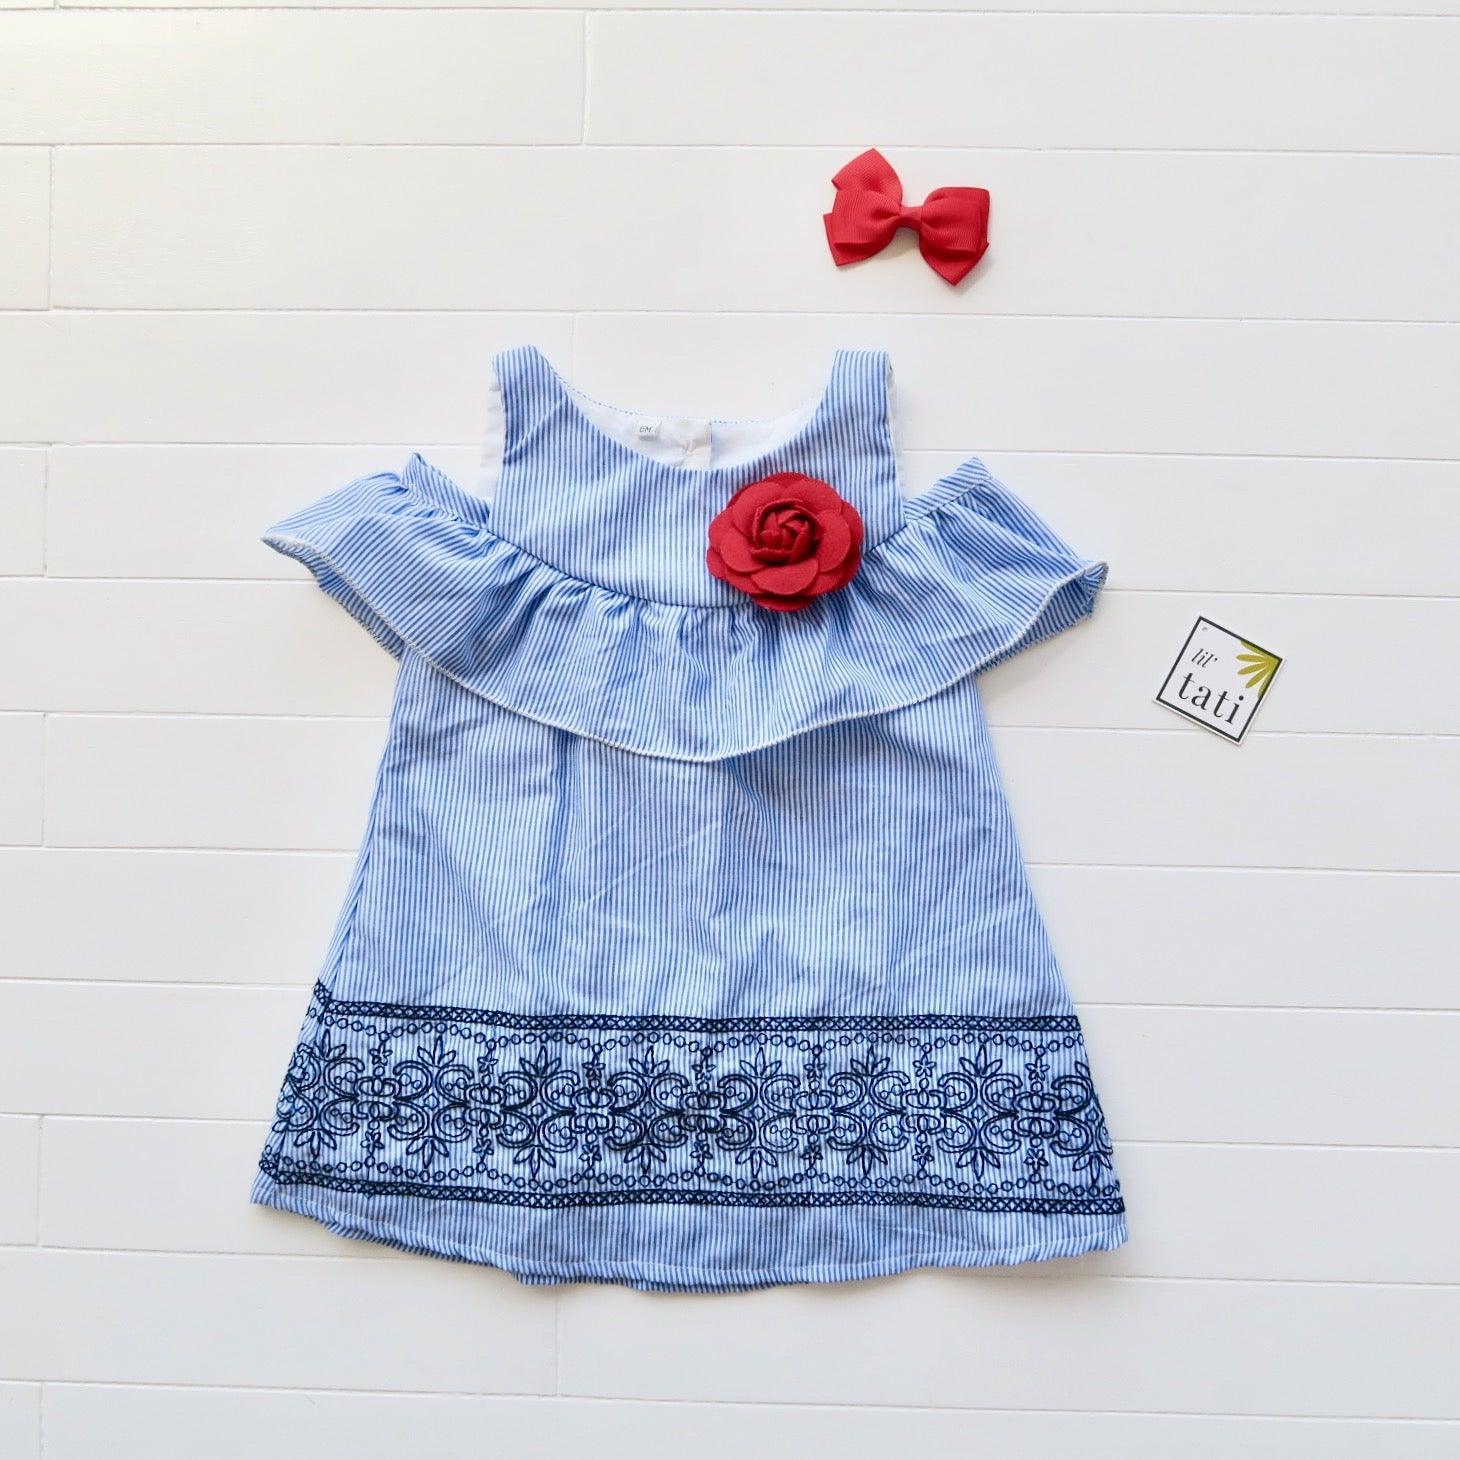 Hyacinth Dress in Blue Stripes Embroidery - Lil' Tati